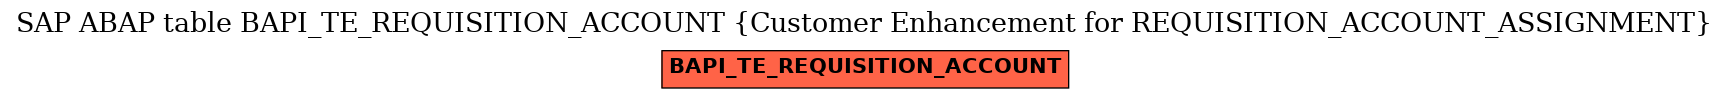 E-R Diagram for table BAPI_TE_REQUISITION_ACCOUNT (Customer Enhancement for REQUISITION_ACCOUNT_ASSIGNMENT)